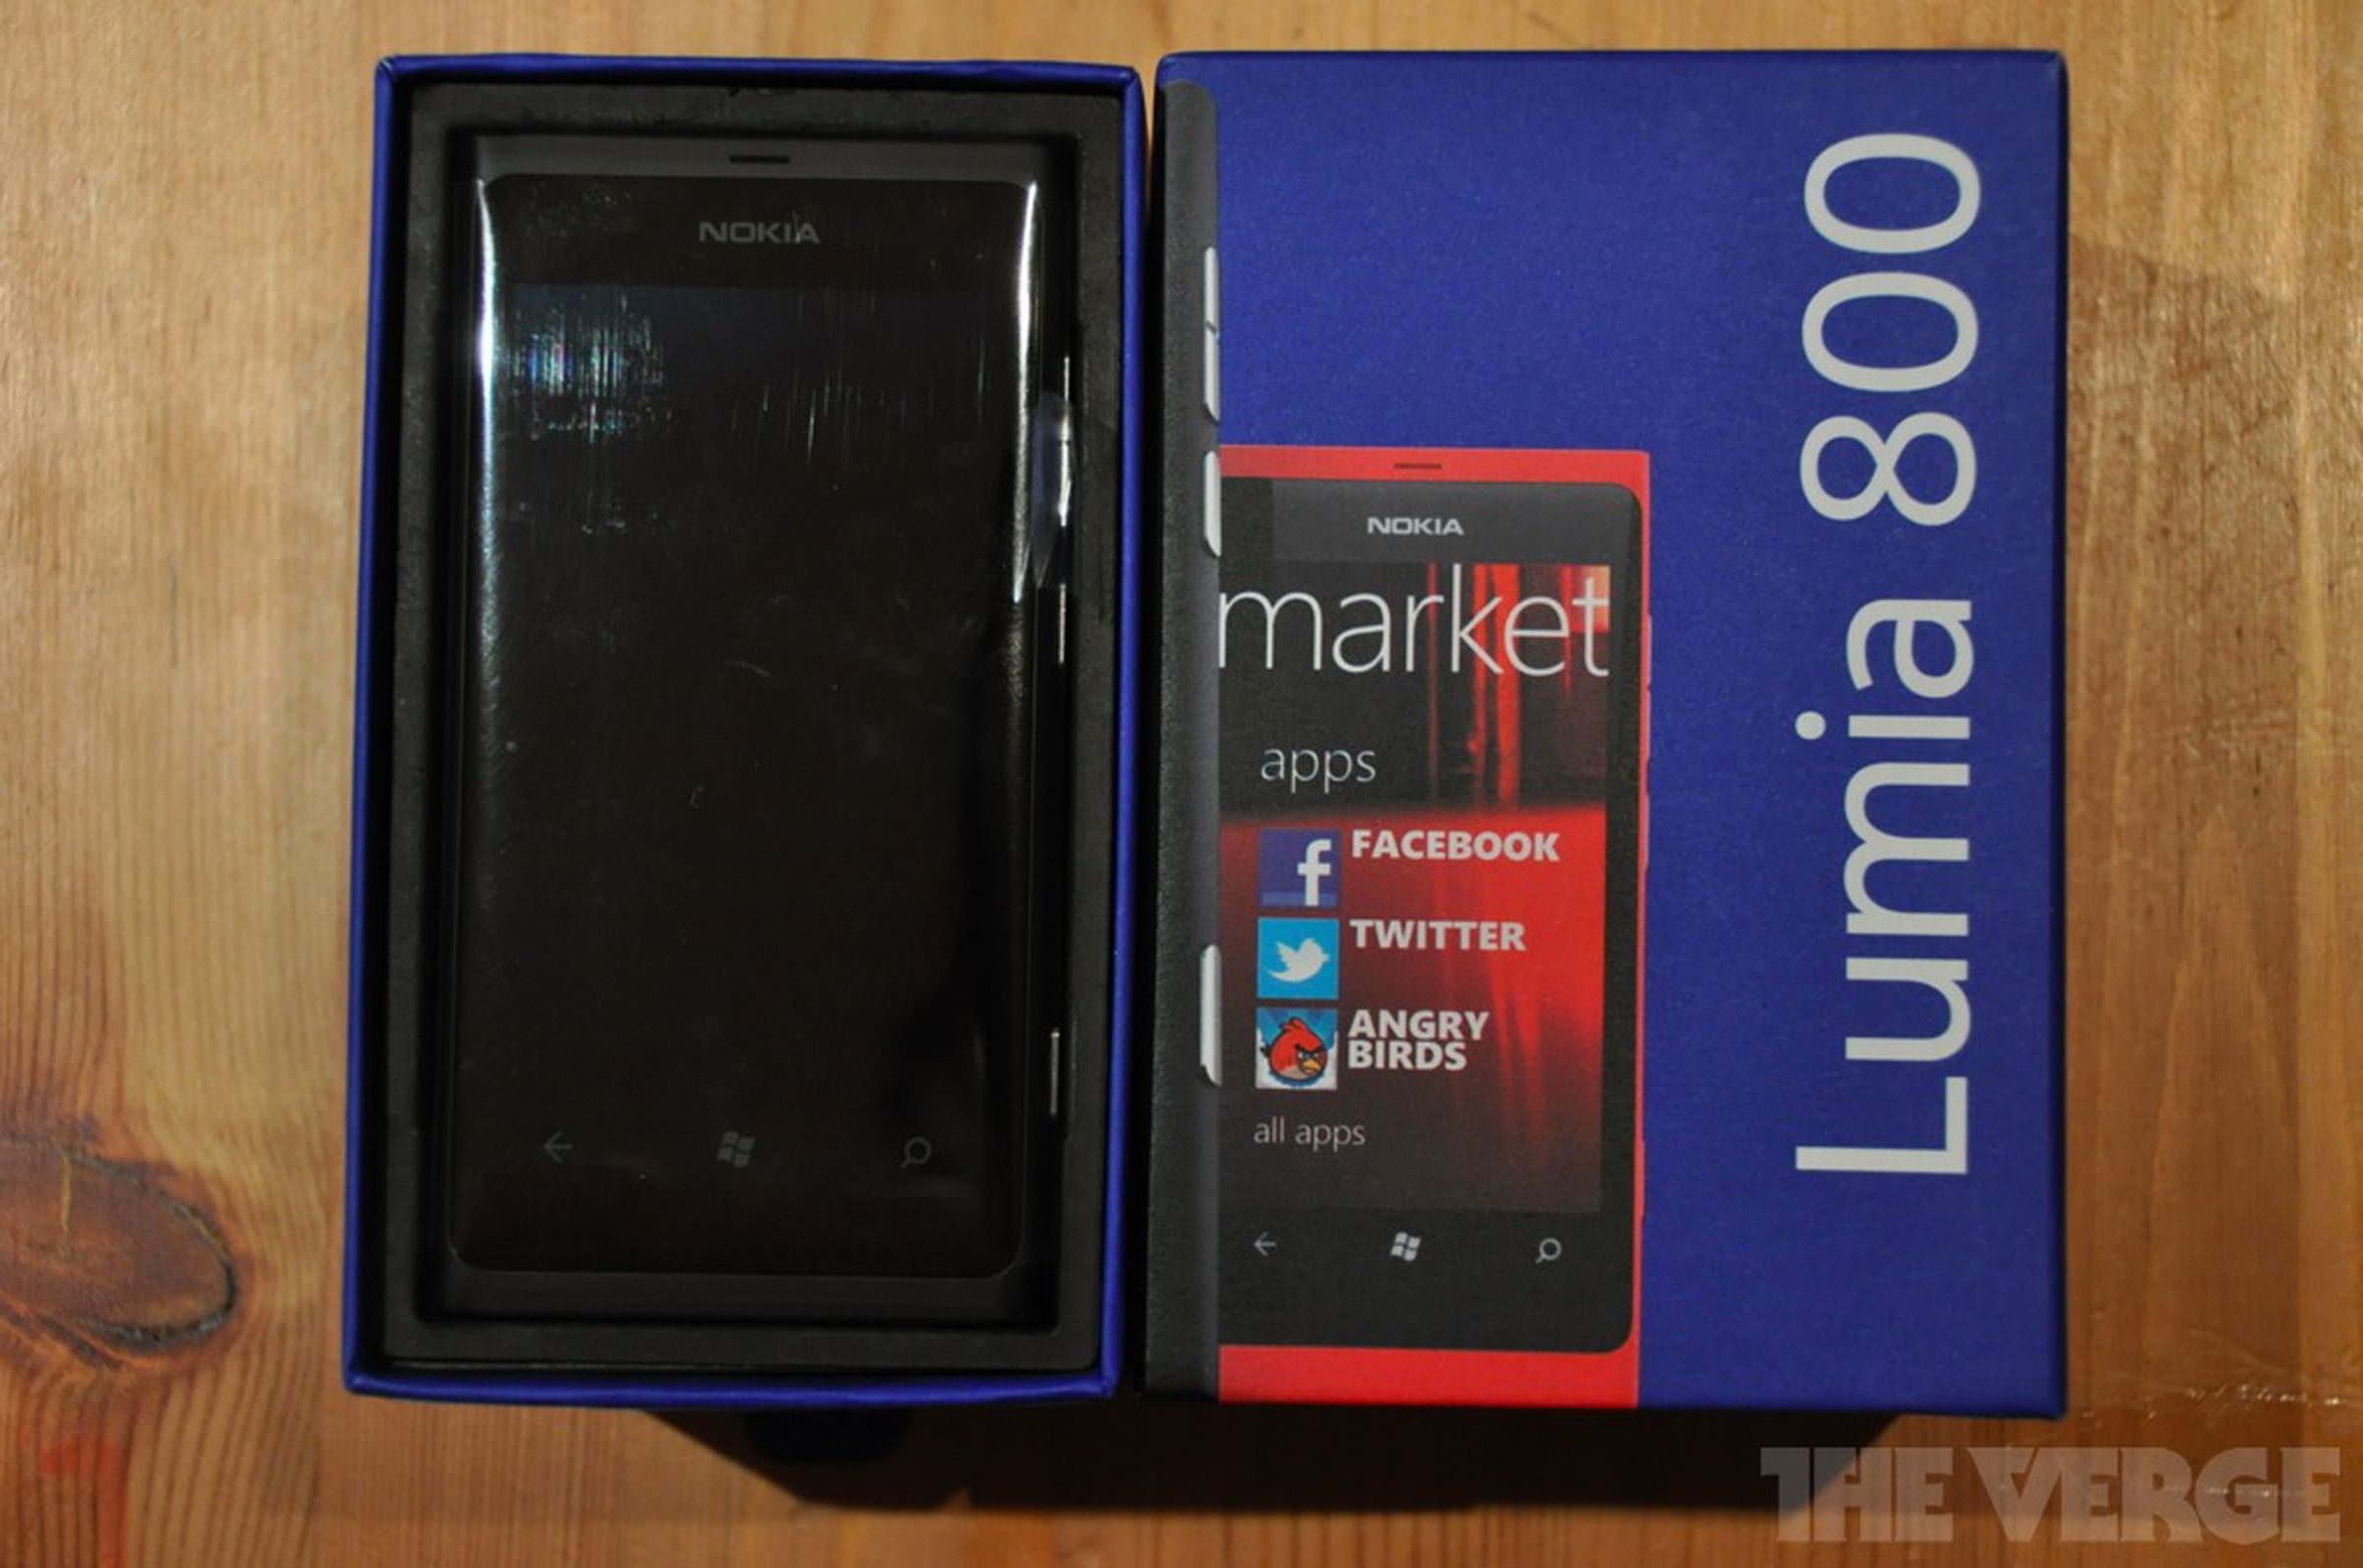 Lumia 800 hardware